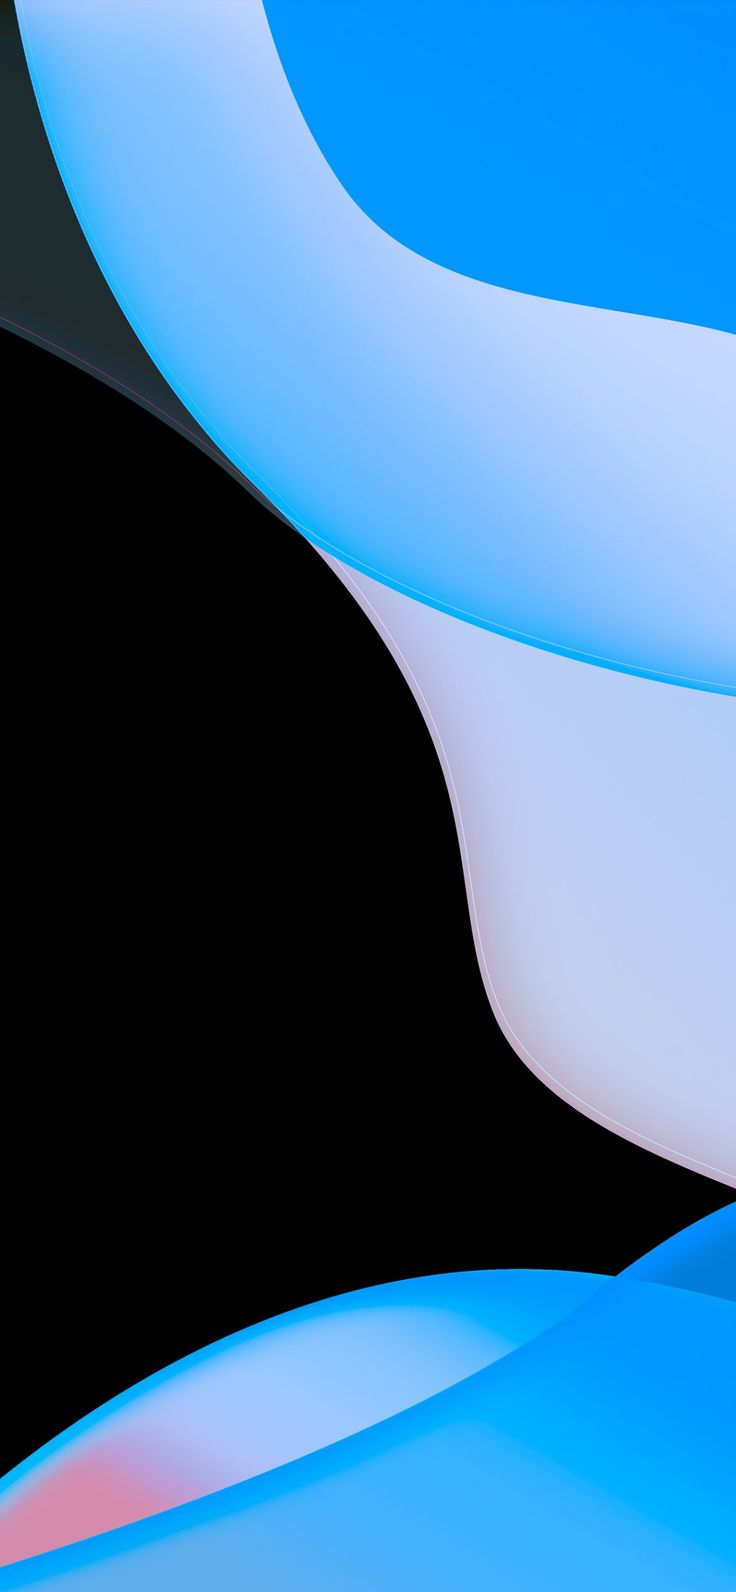  Dynamische Hintergrundbild 736x1592. DYNAMIC FLUID GRADIENT BLUE FOR iPhone. iPhone dynamic wallpaper, Phone wallpaper design, iPhone wallpaper